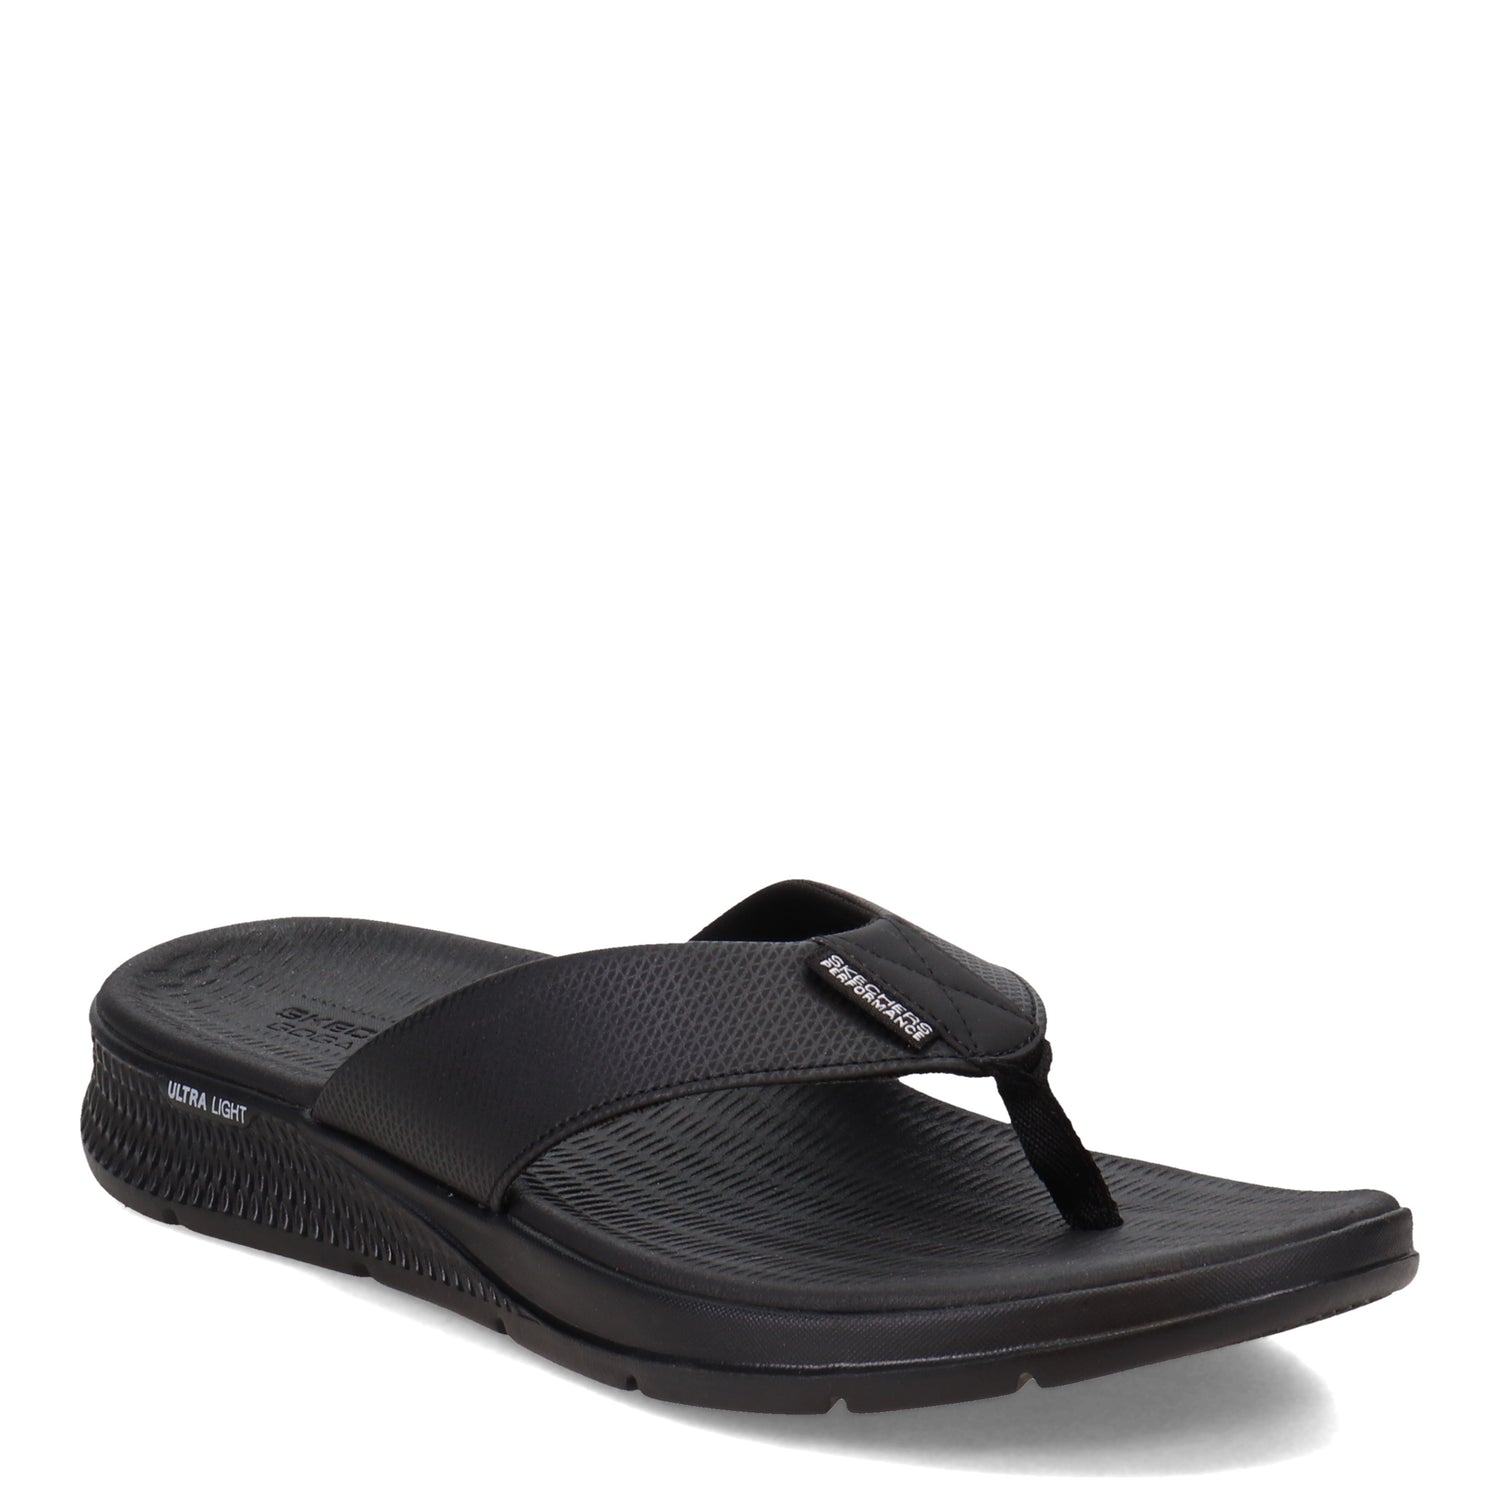 Peltz Shoes  Men's Skechers GO Consistent Sandal - Synthwave Sandal SOLID BLACK 229035-BBK